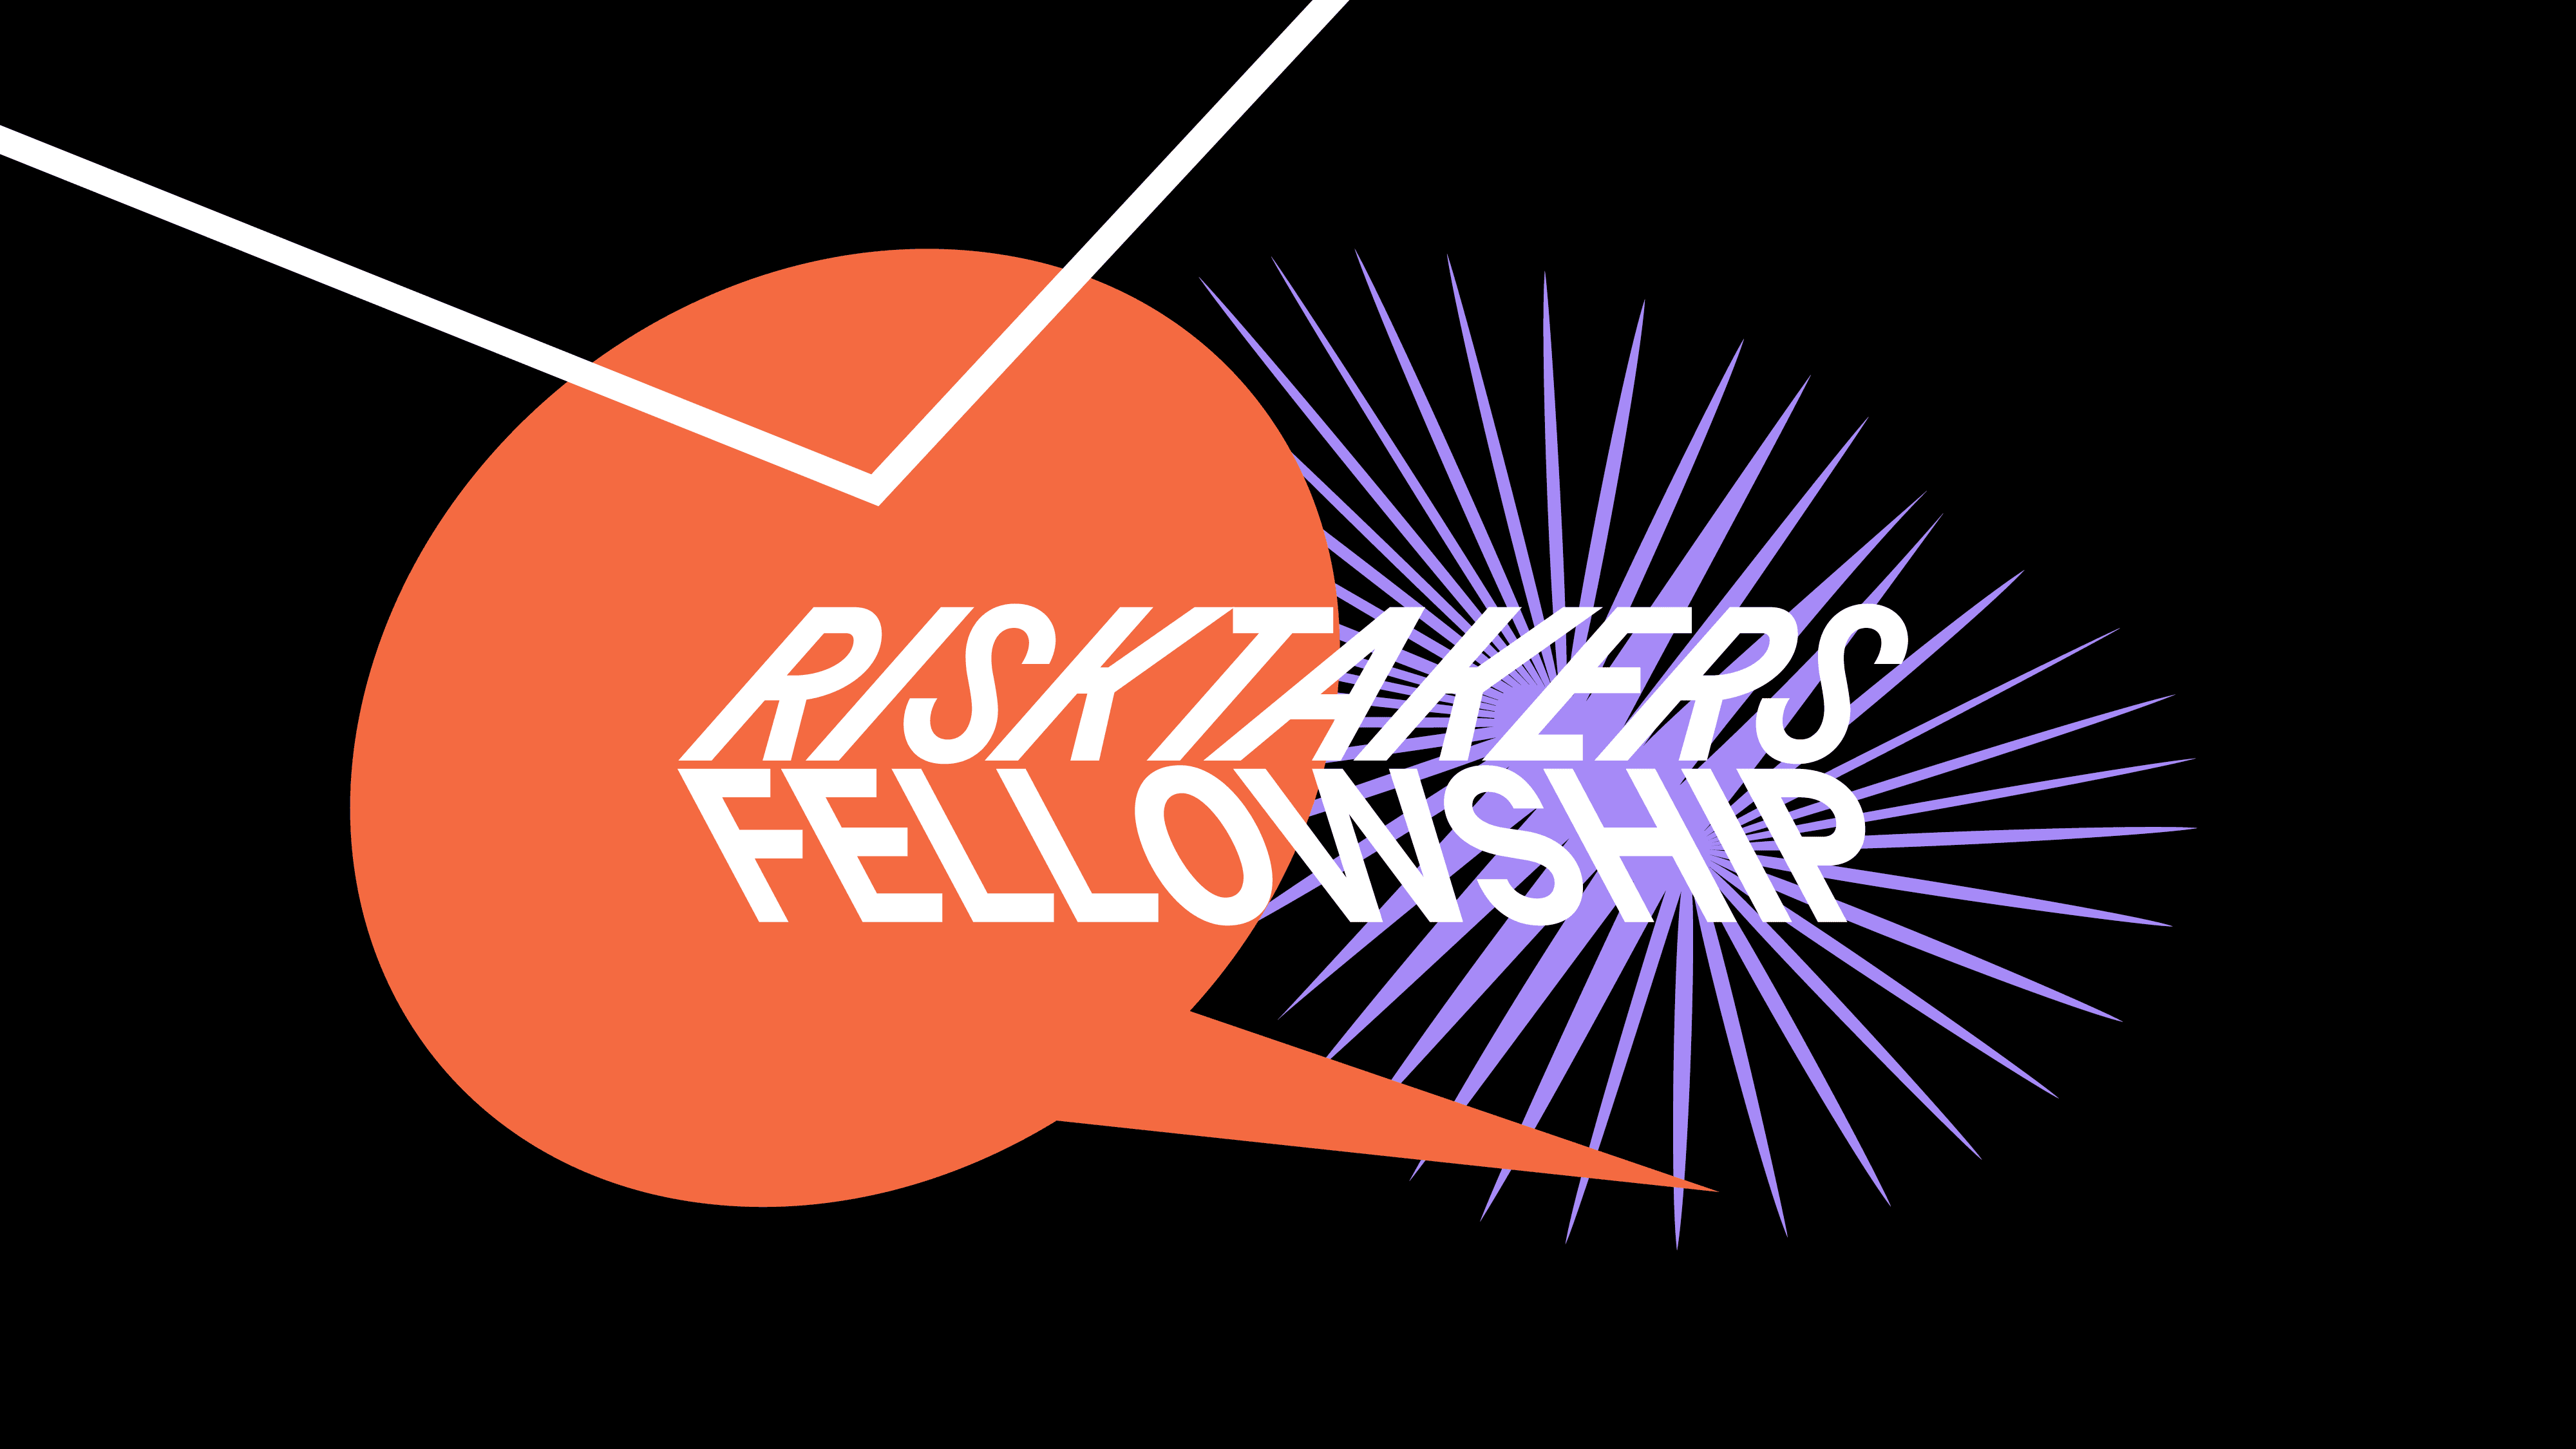 Logo of the Risktakers Fellowship  designed by Unicorn Studio 